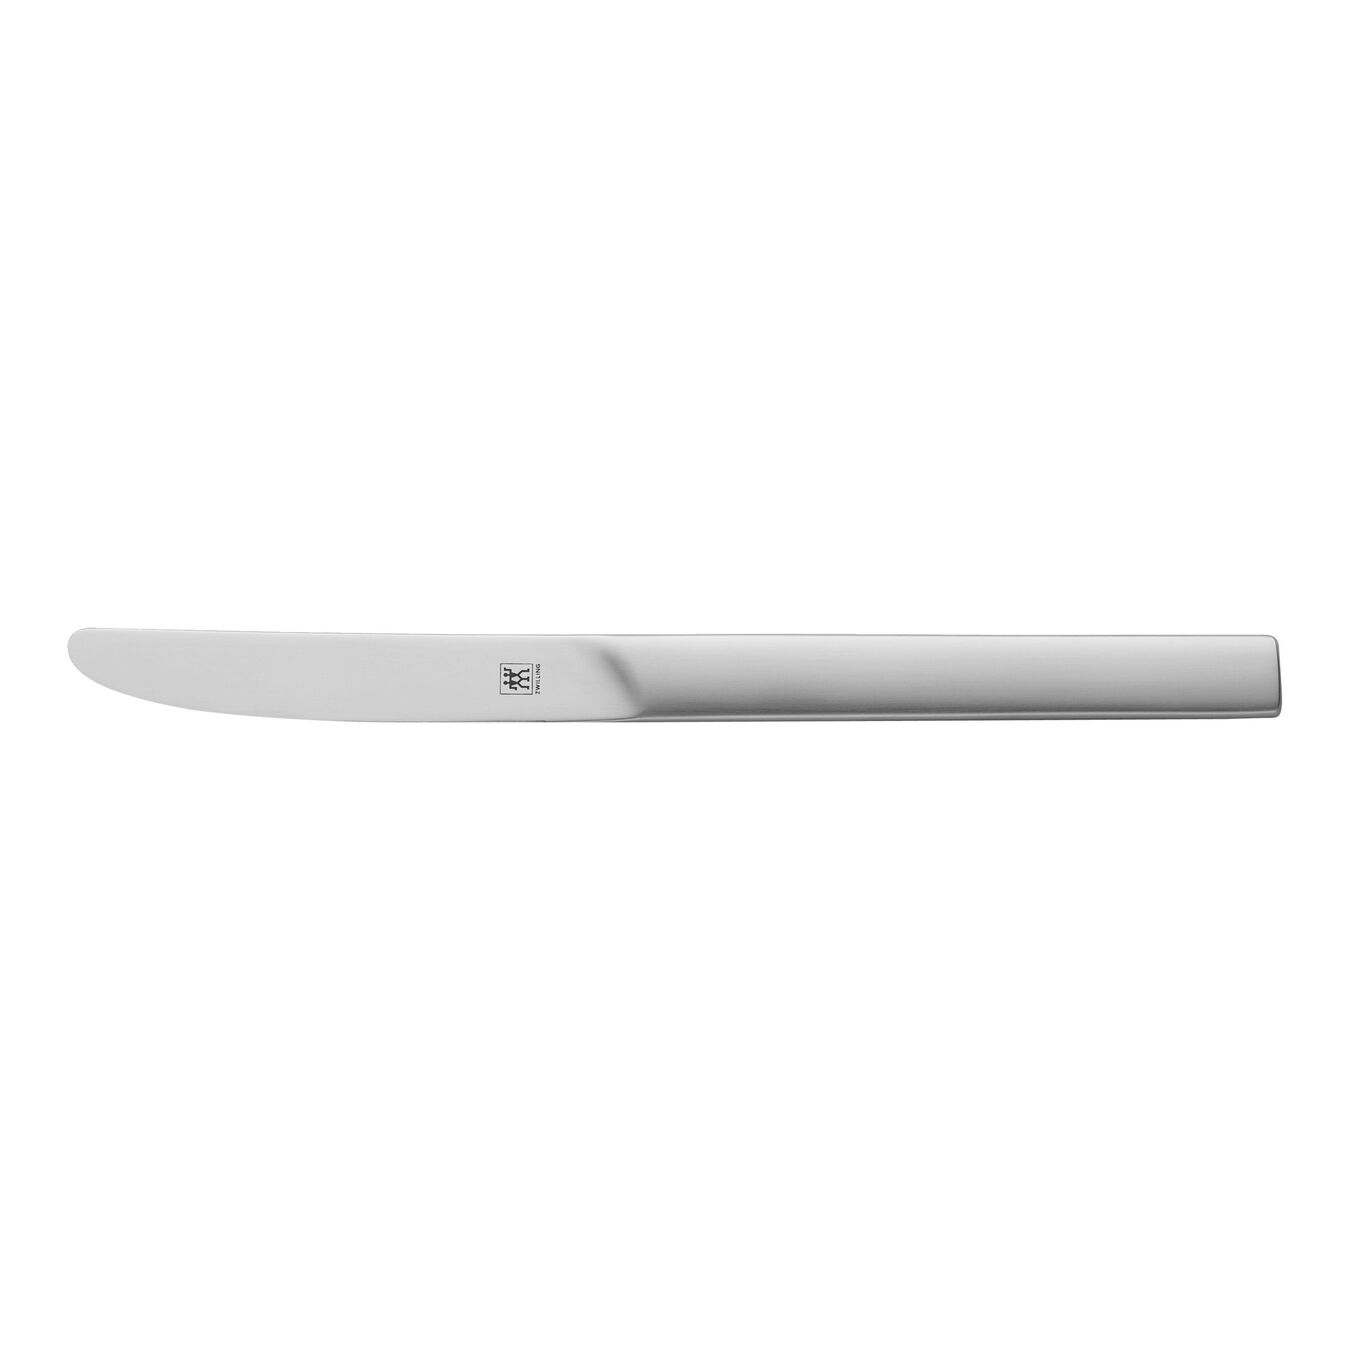 Bordskniv Matt,,large 1